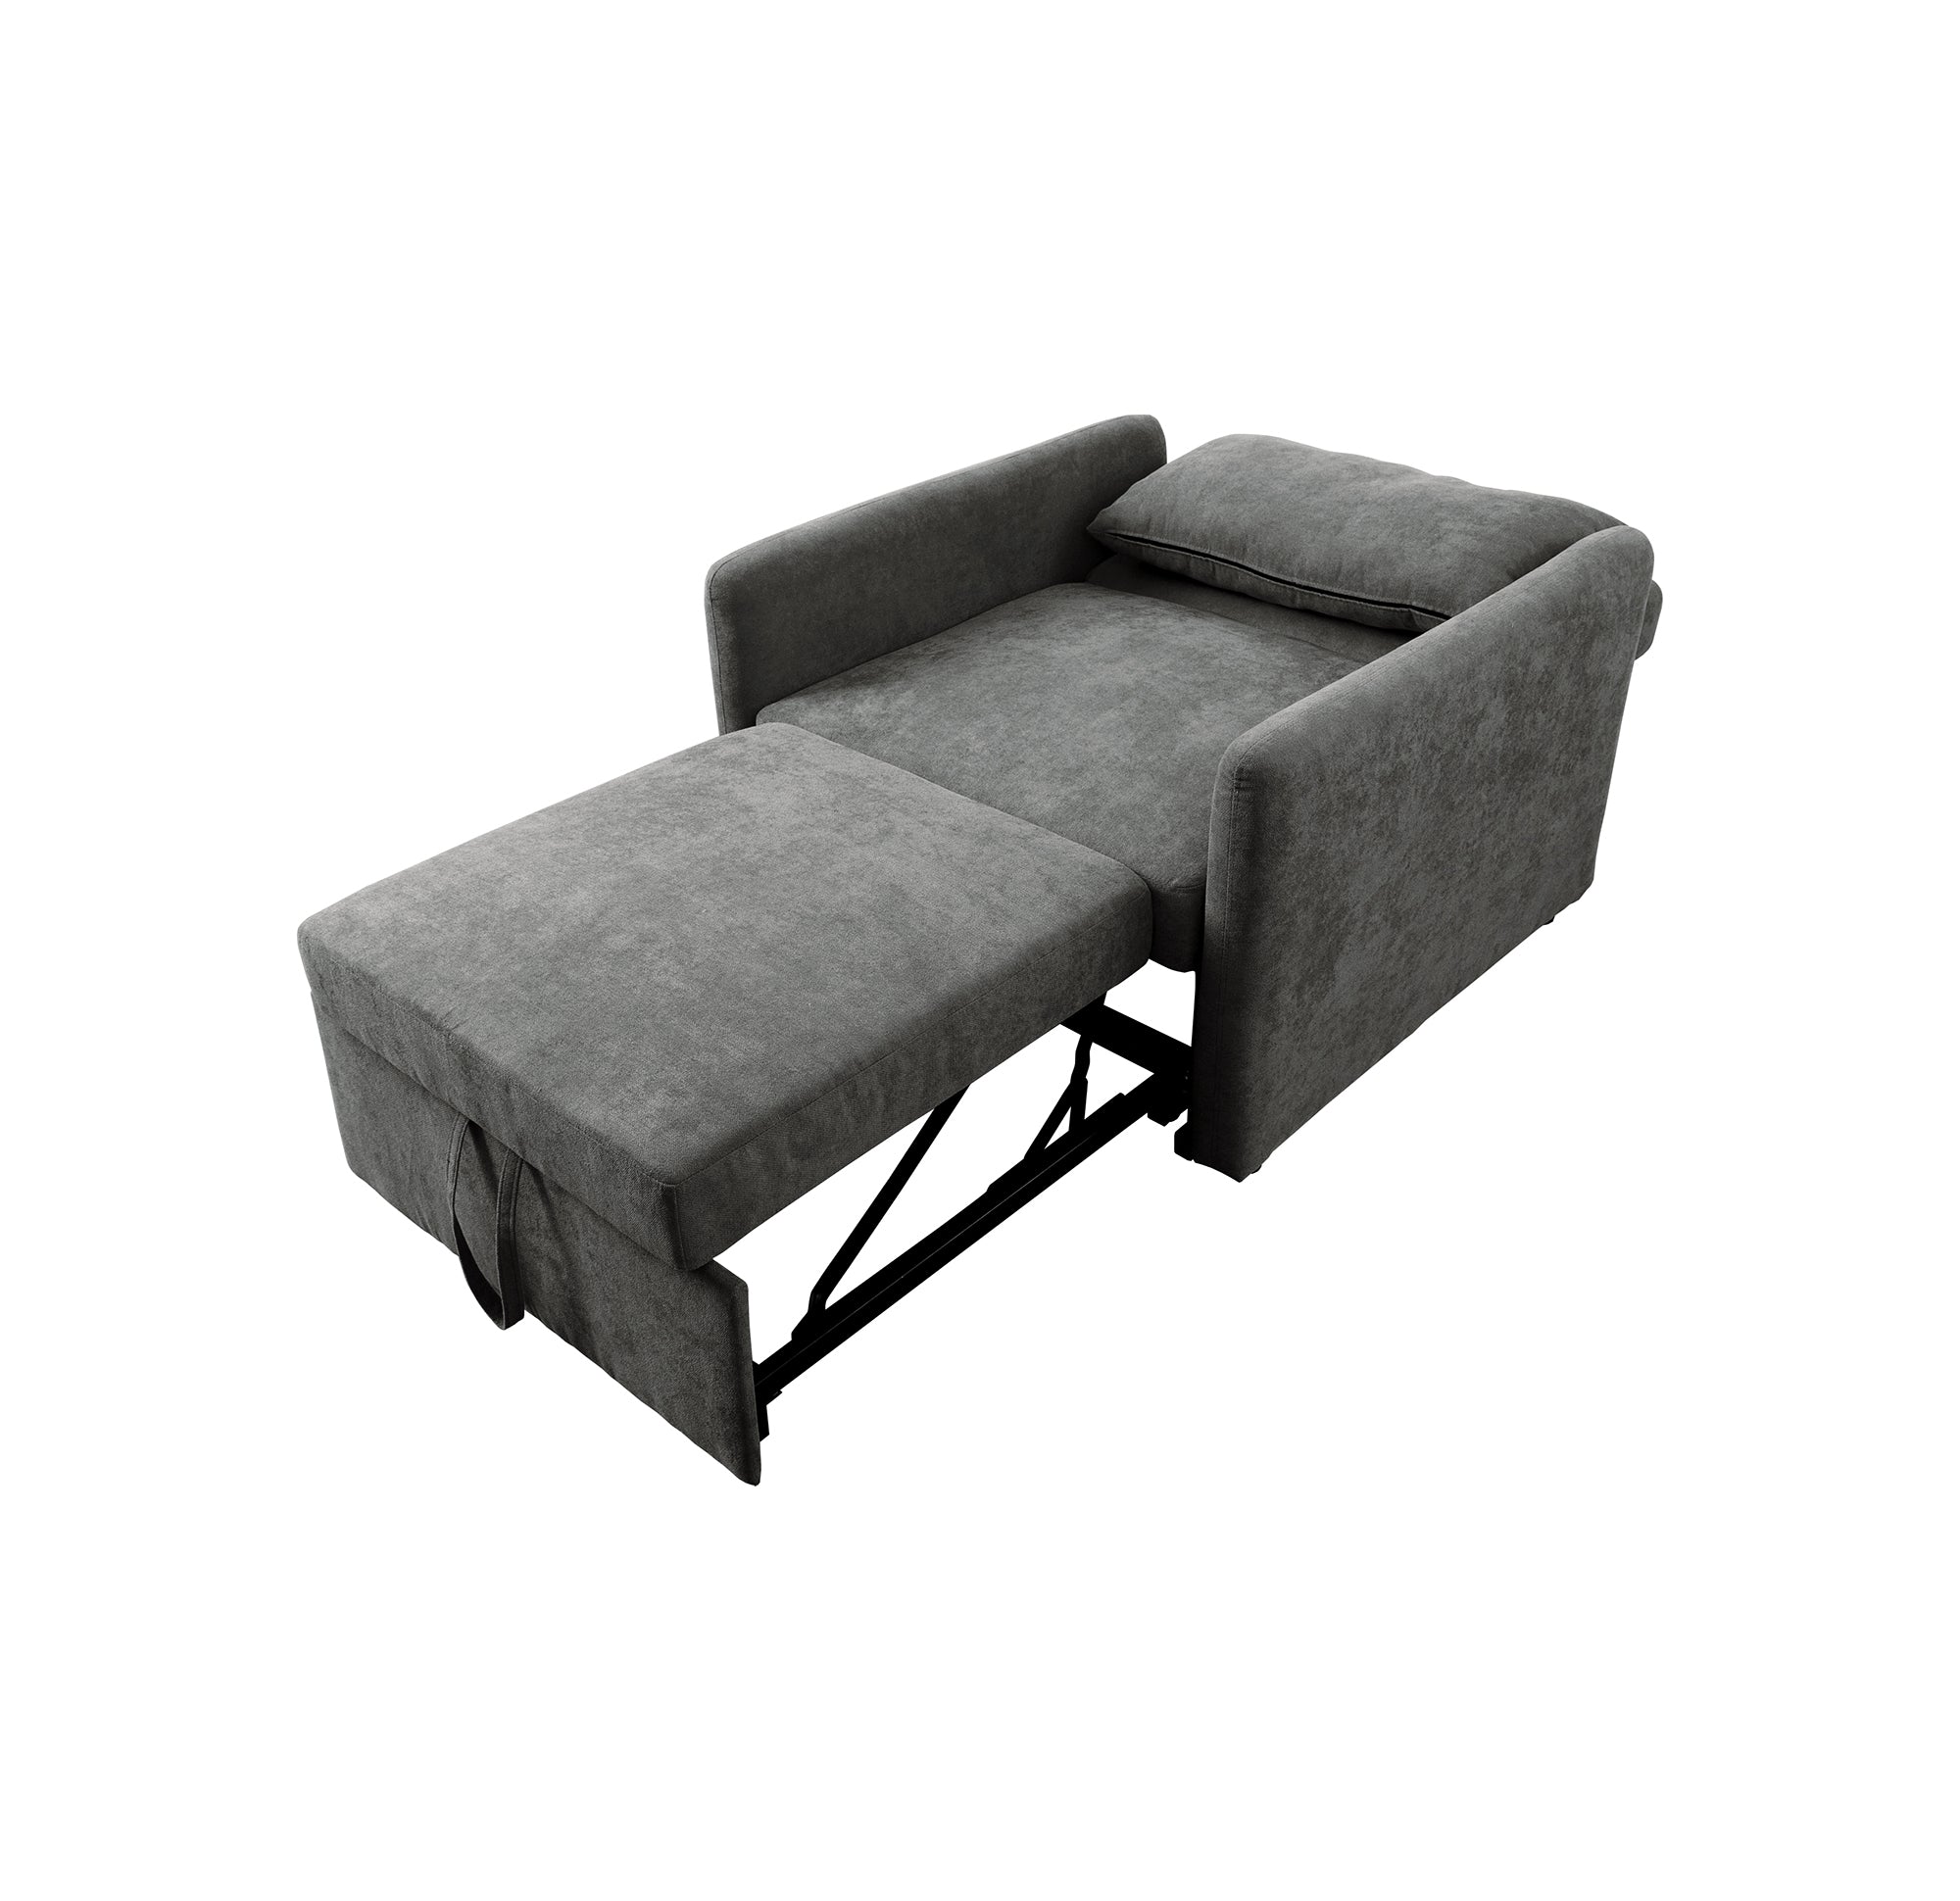 Ainehome Dark Grey Lint foldable Sofa bed